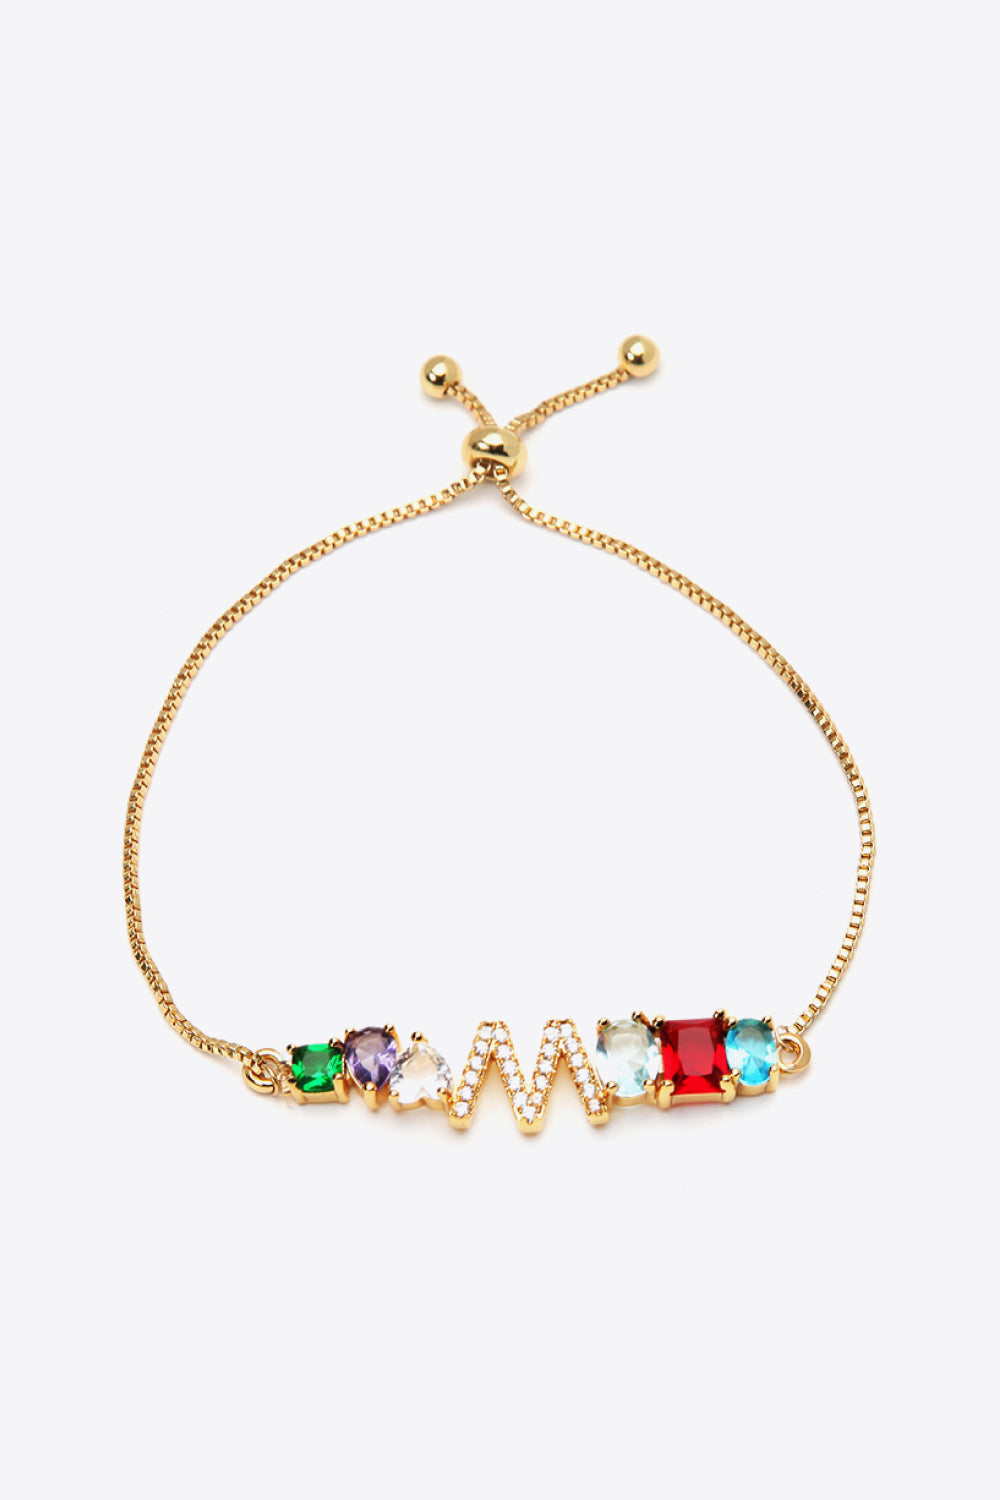 K to T Zircon Bracelet - M / One Size - Women’s Jewelry - Bracelets - 7 - 2024